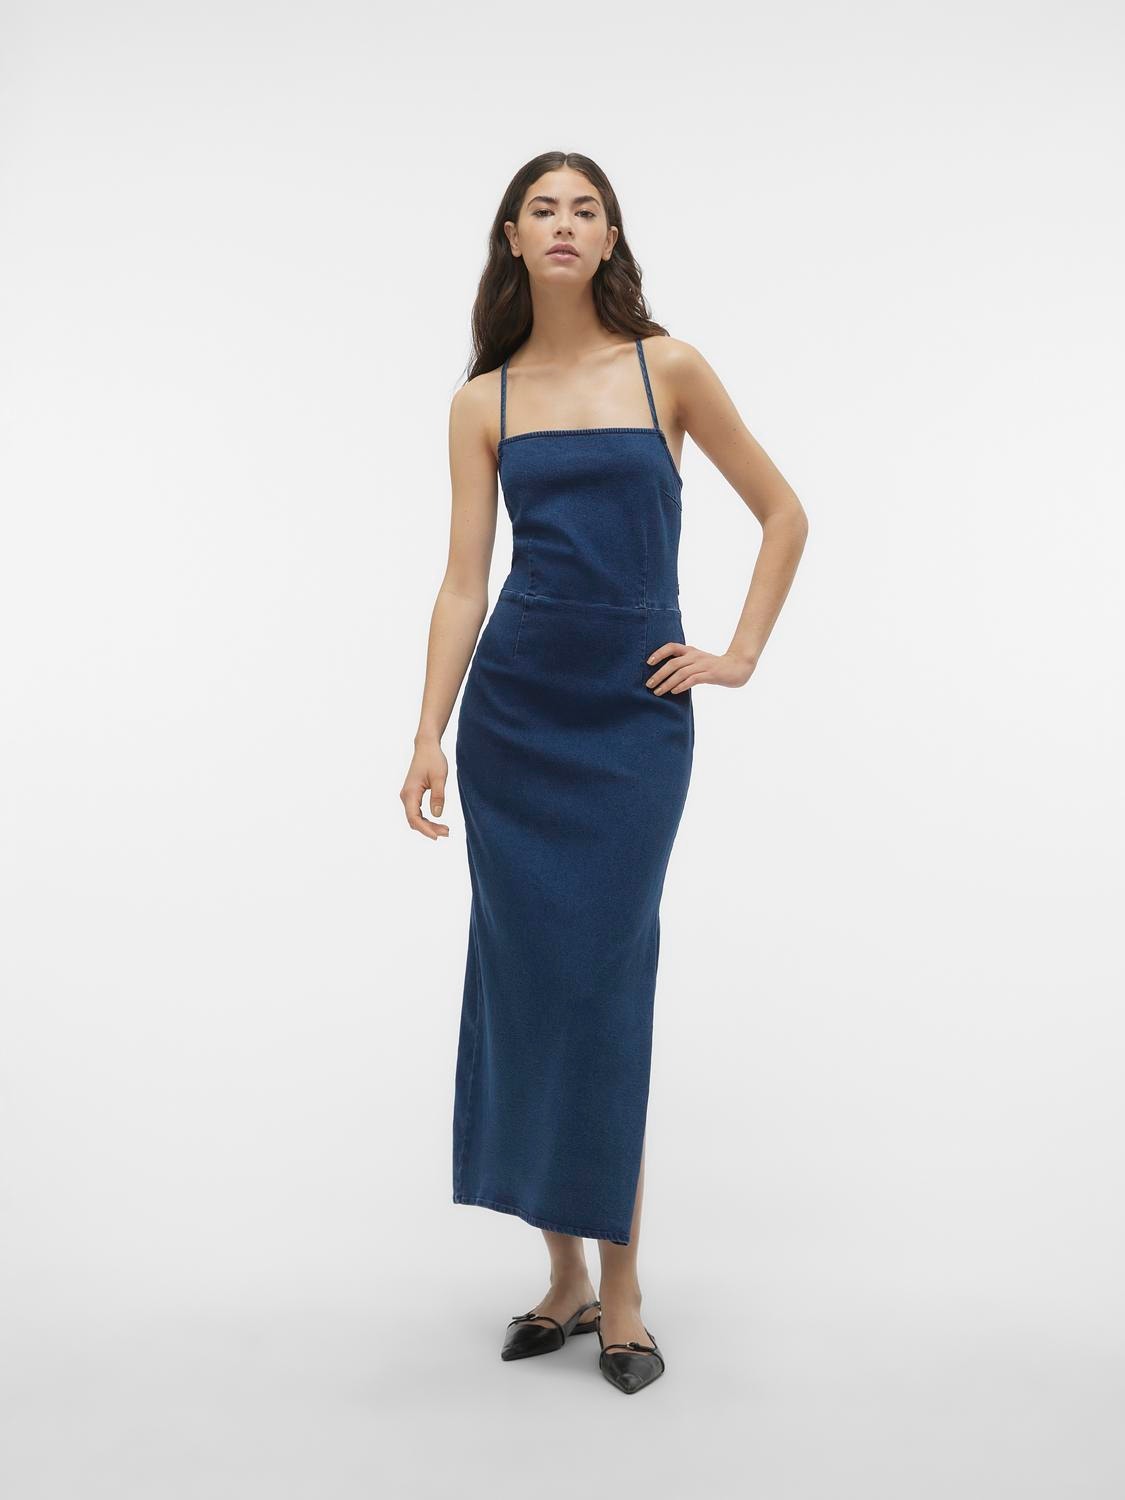 Vero Moda VMISLA Long dress -Dark Blue Denim - 10304181